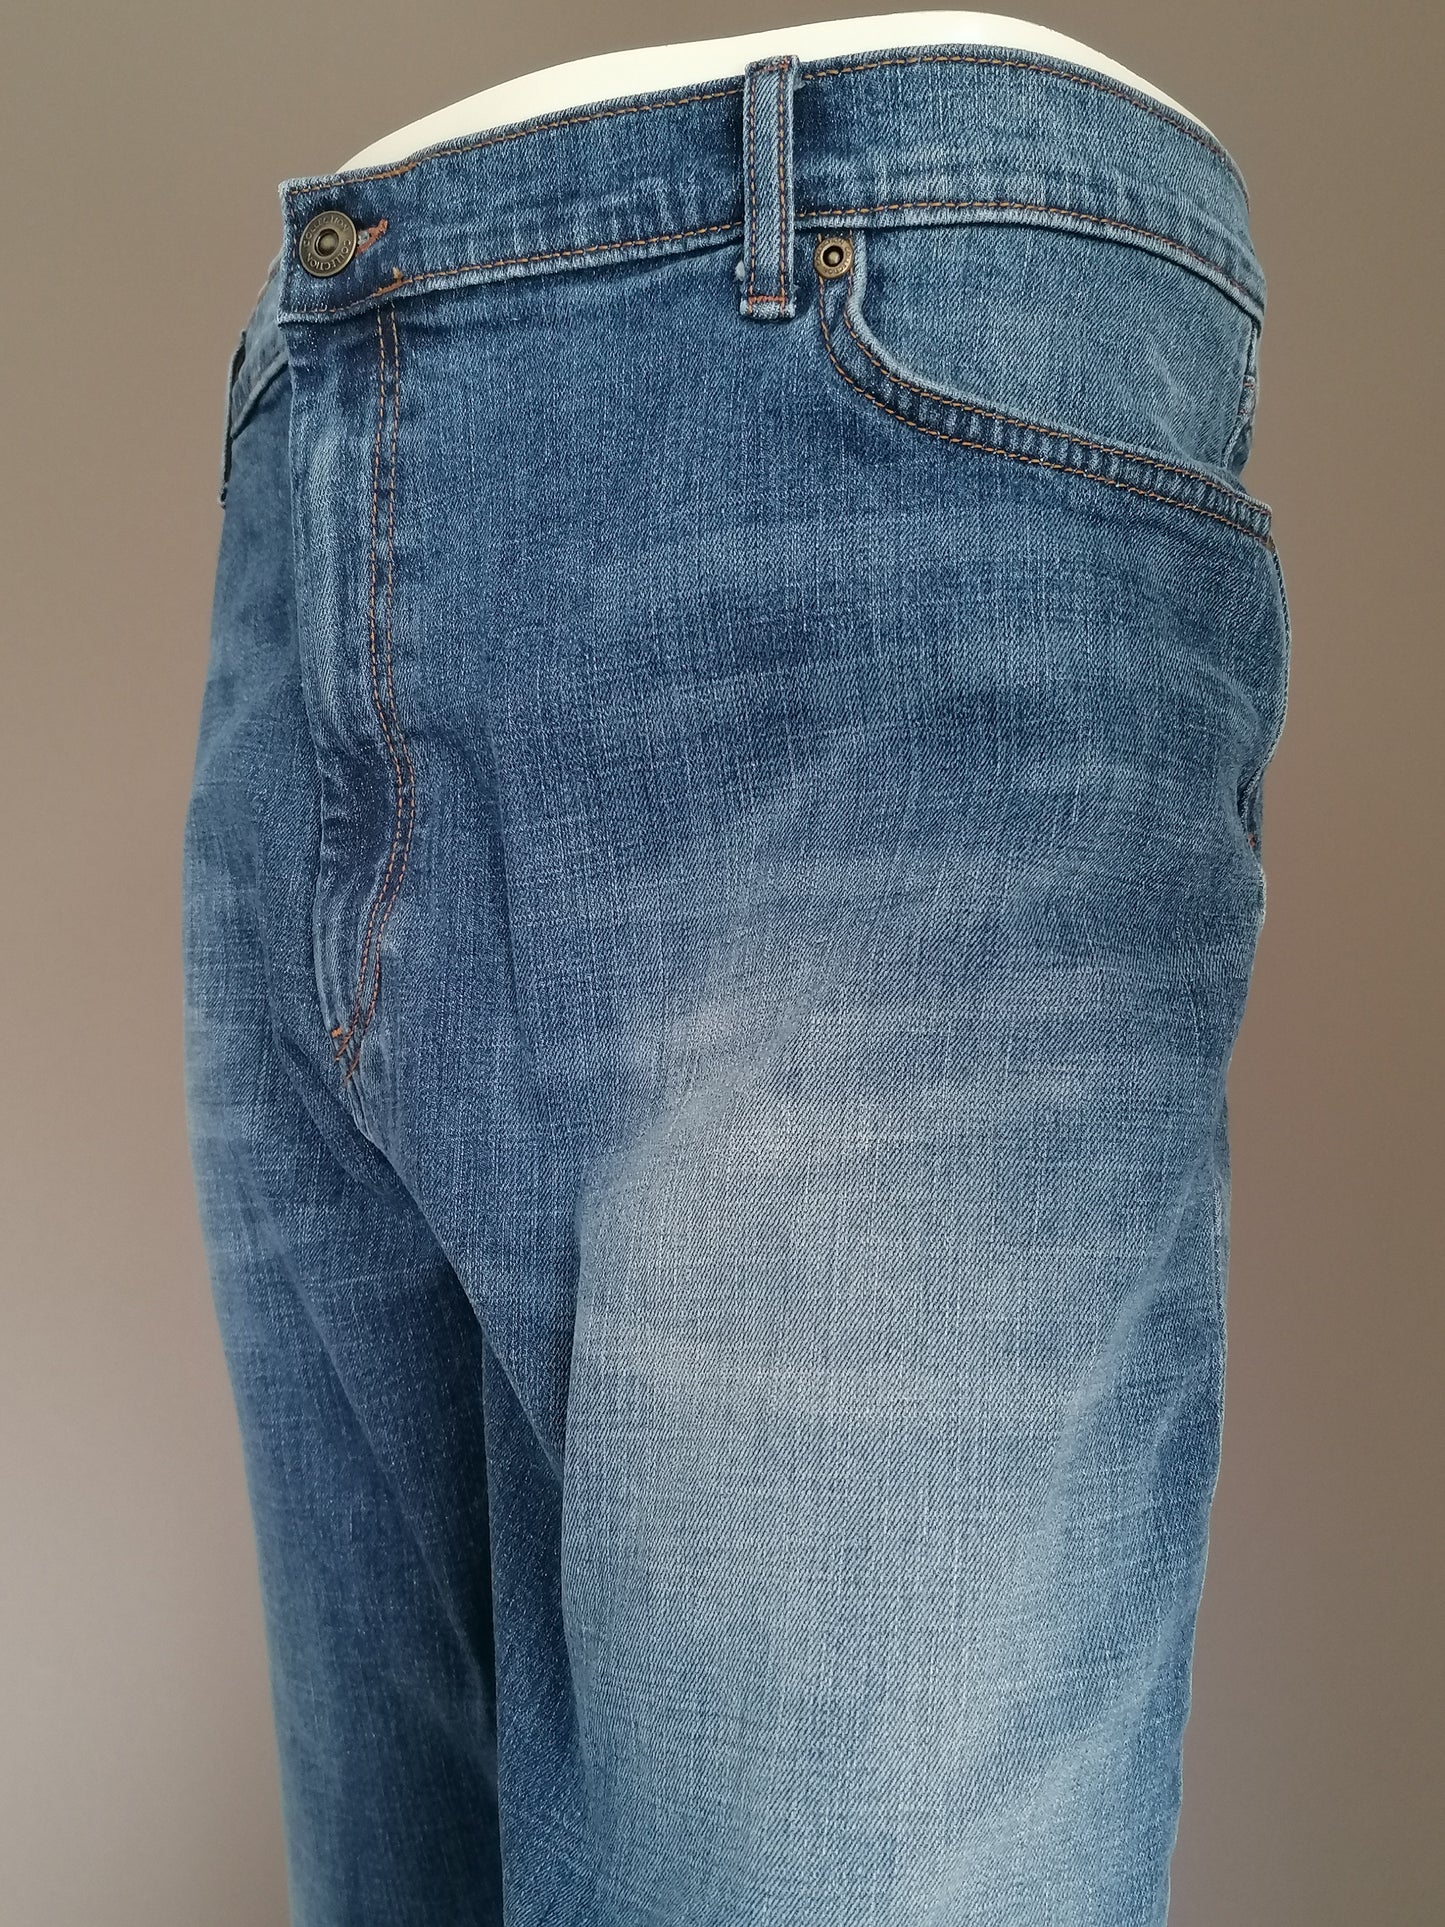 M&S (Marks & Spencer) jeans. Blauw gekleurd. Tapered. Maat W44 - L30. Stretch.